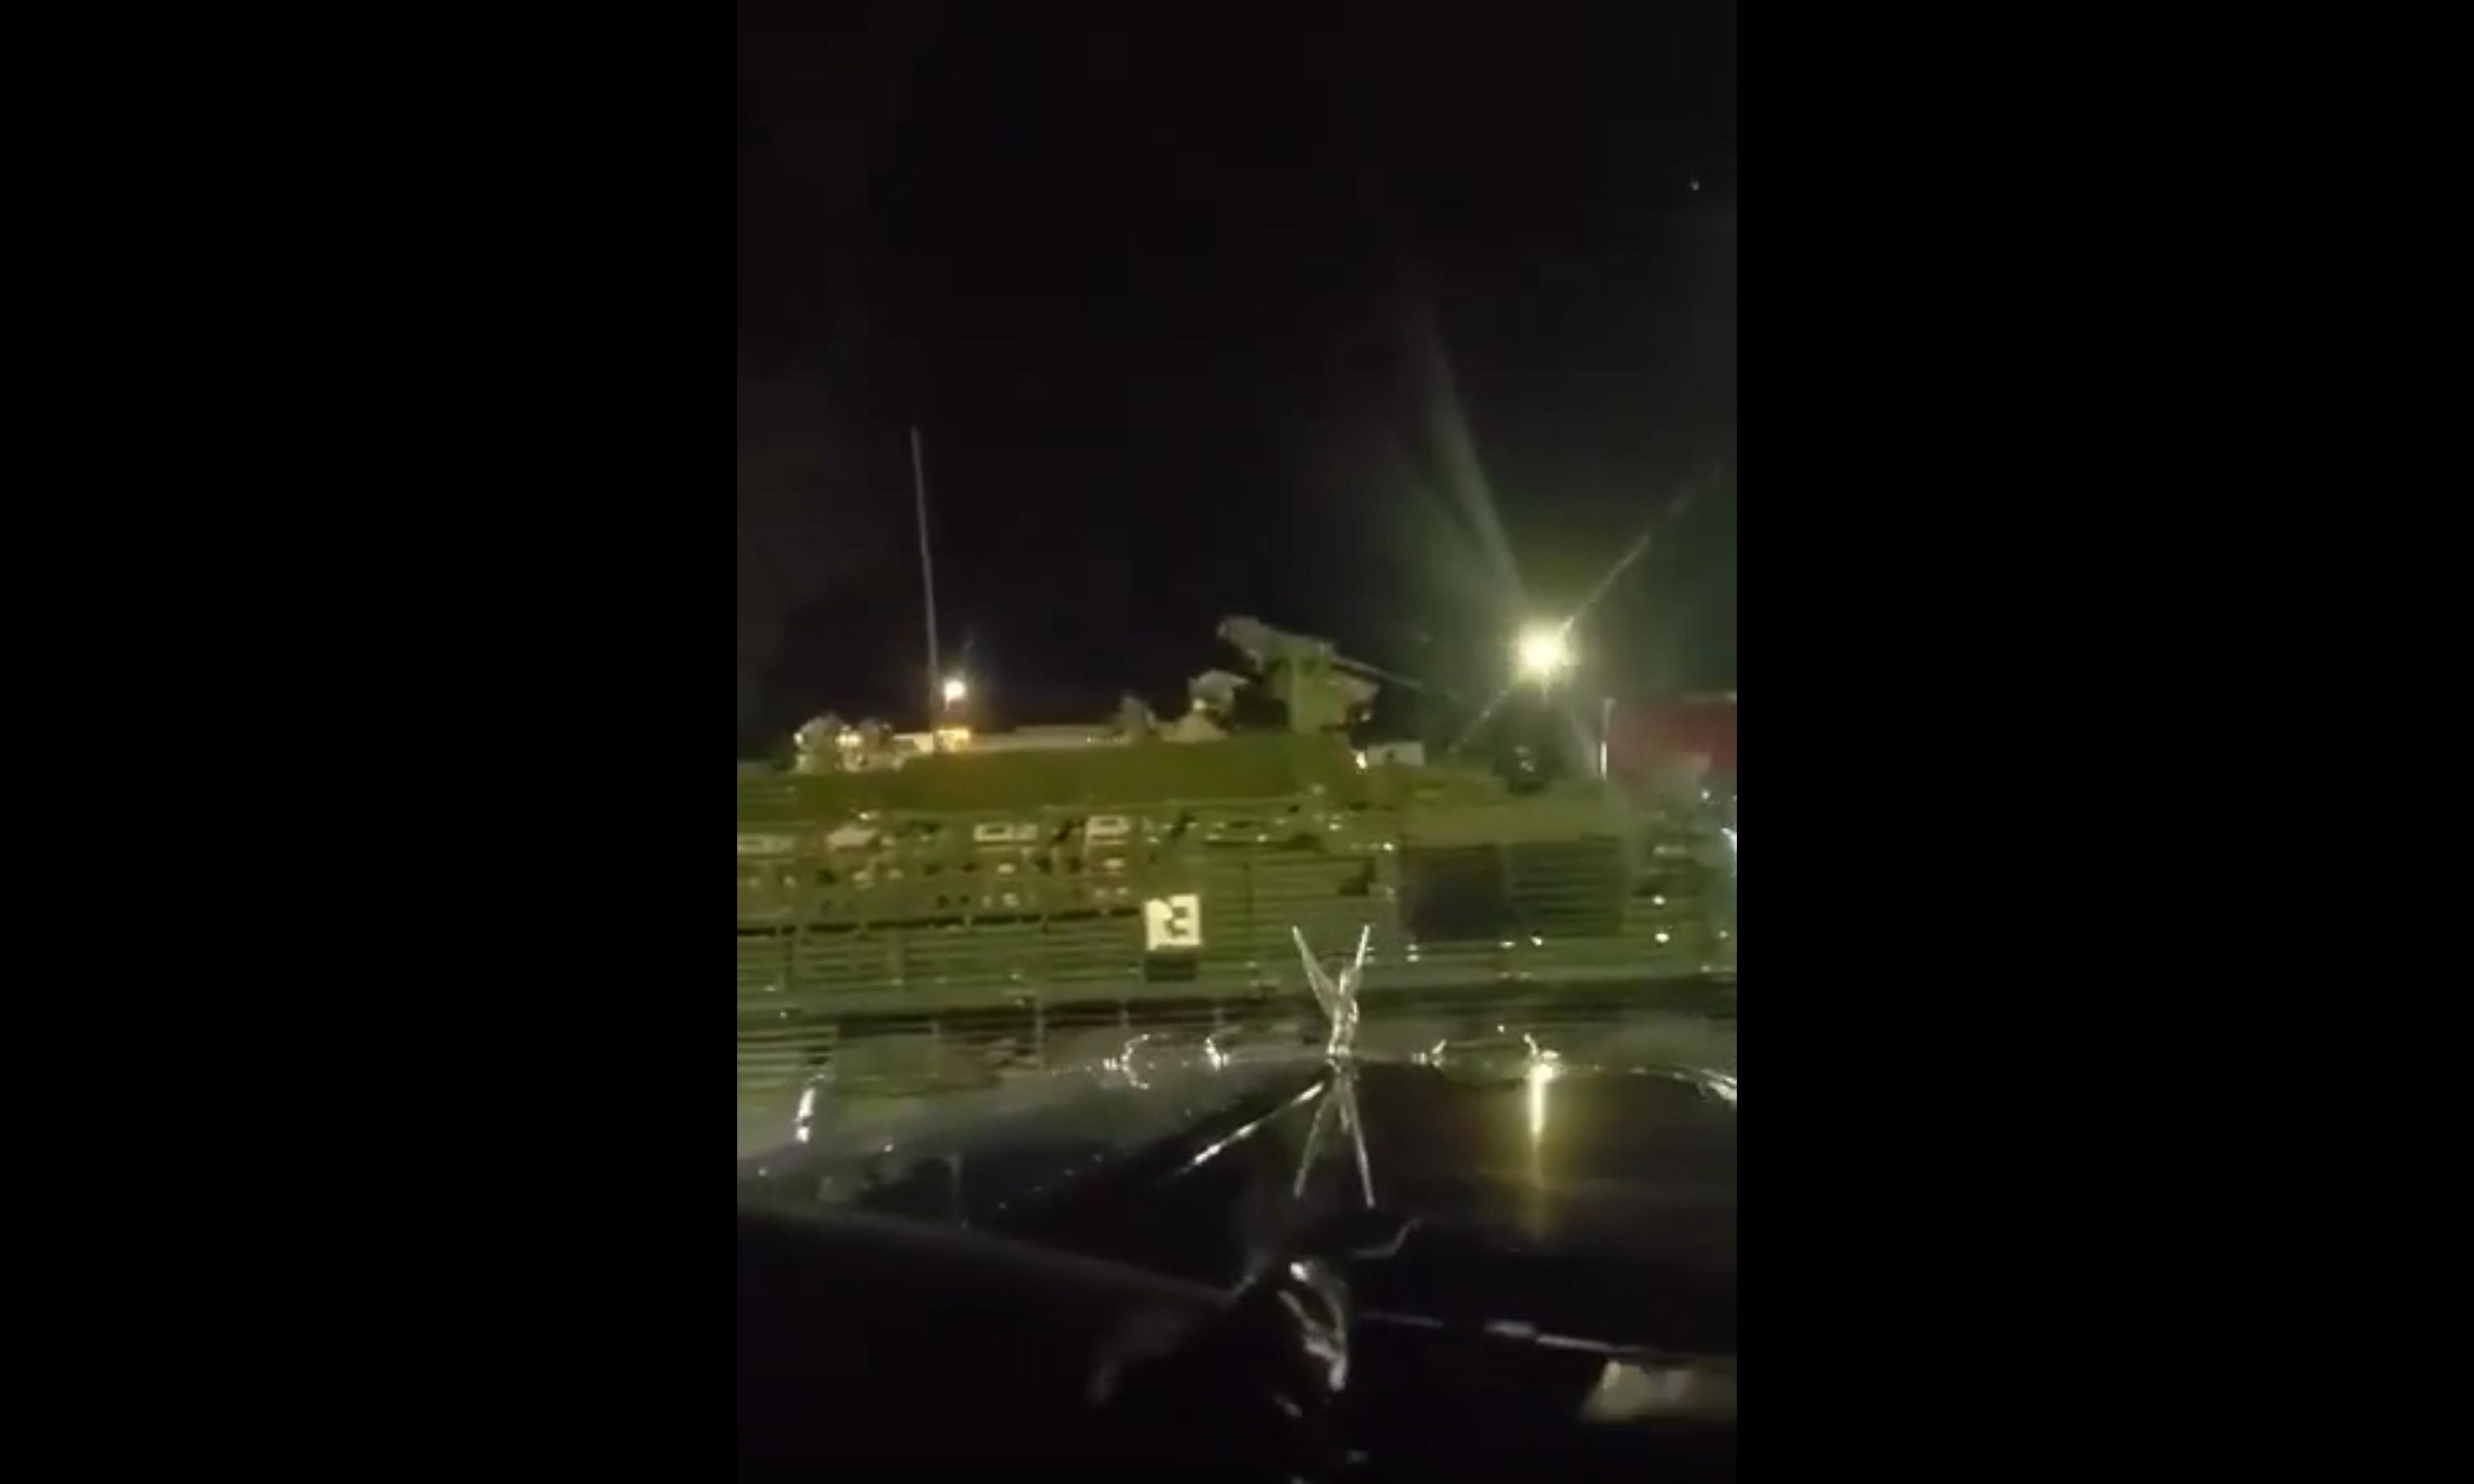 VIDEO: Military unit rolls through truck stop